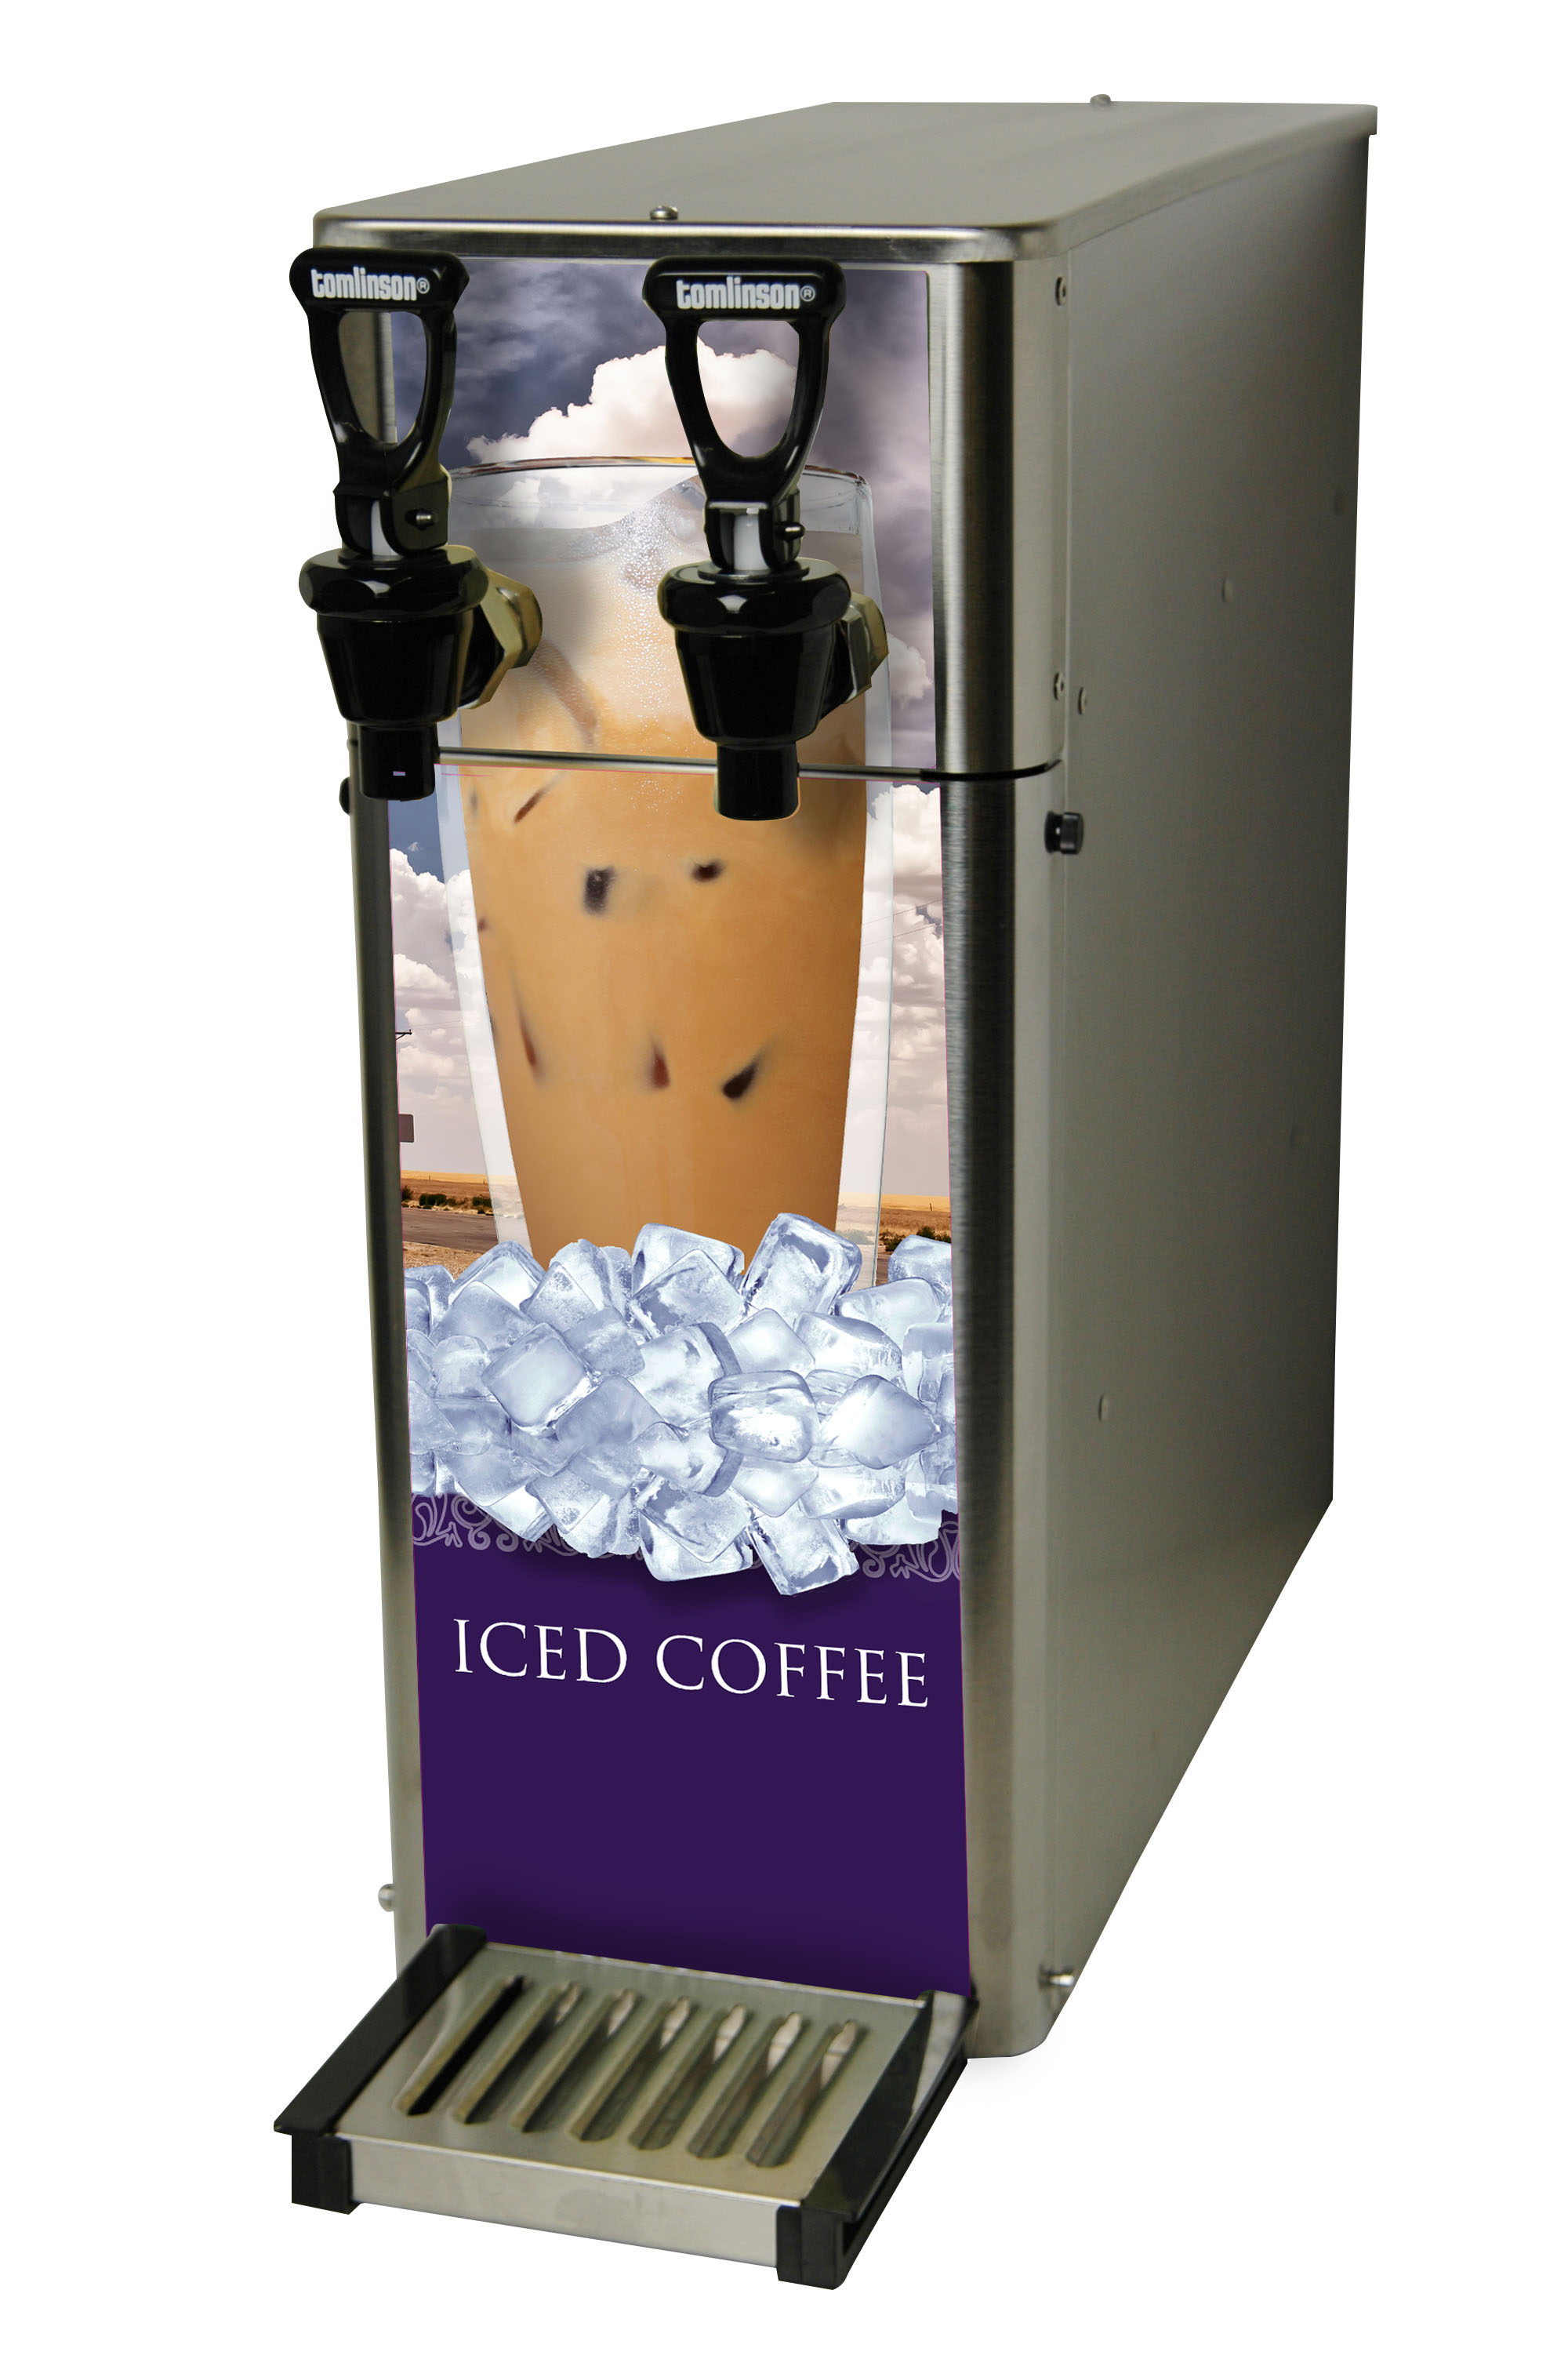 FPM 2 Iced Coffee 